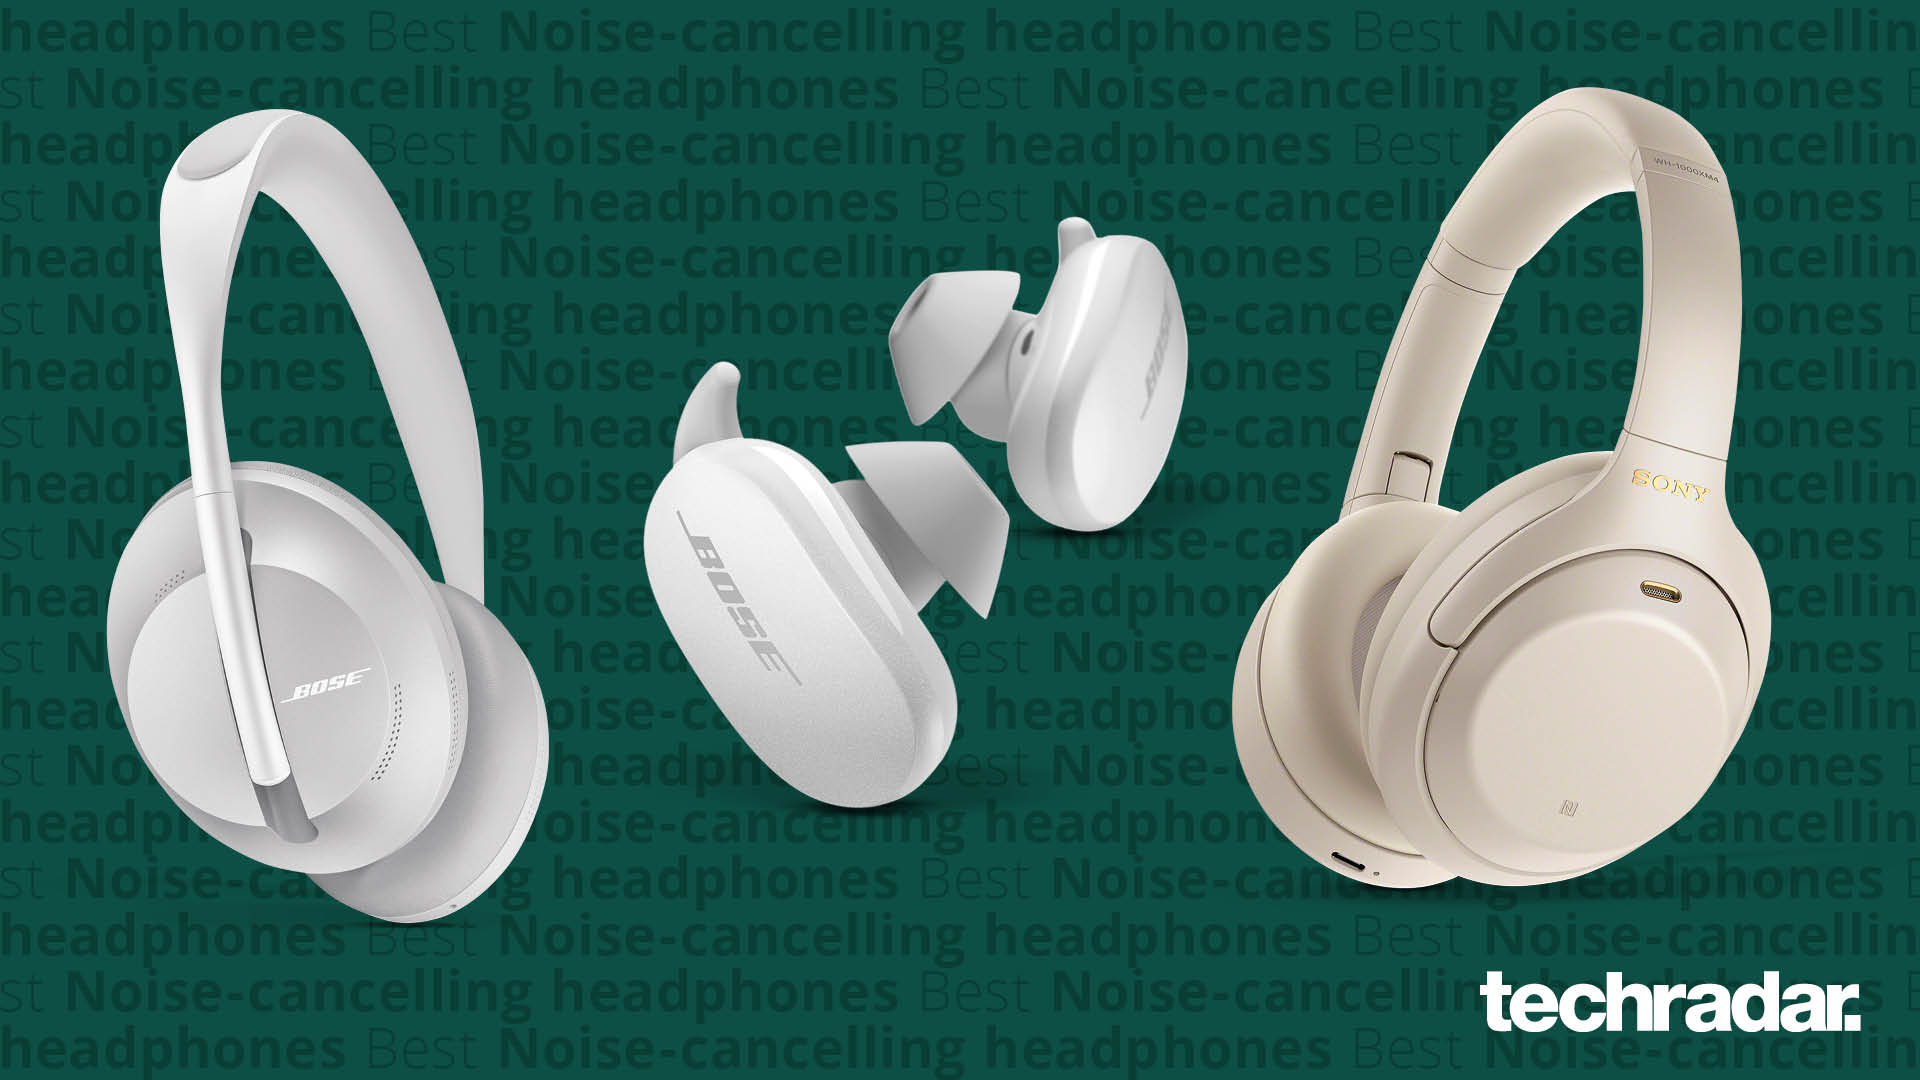 UK Wireless Bluetooth Over Ear Headphones Earphones Headset Noise Cancelling NEW 